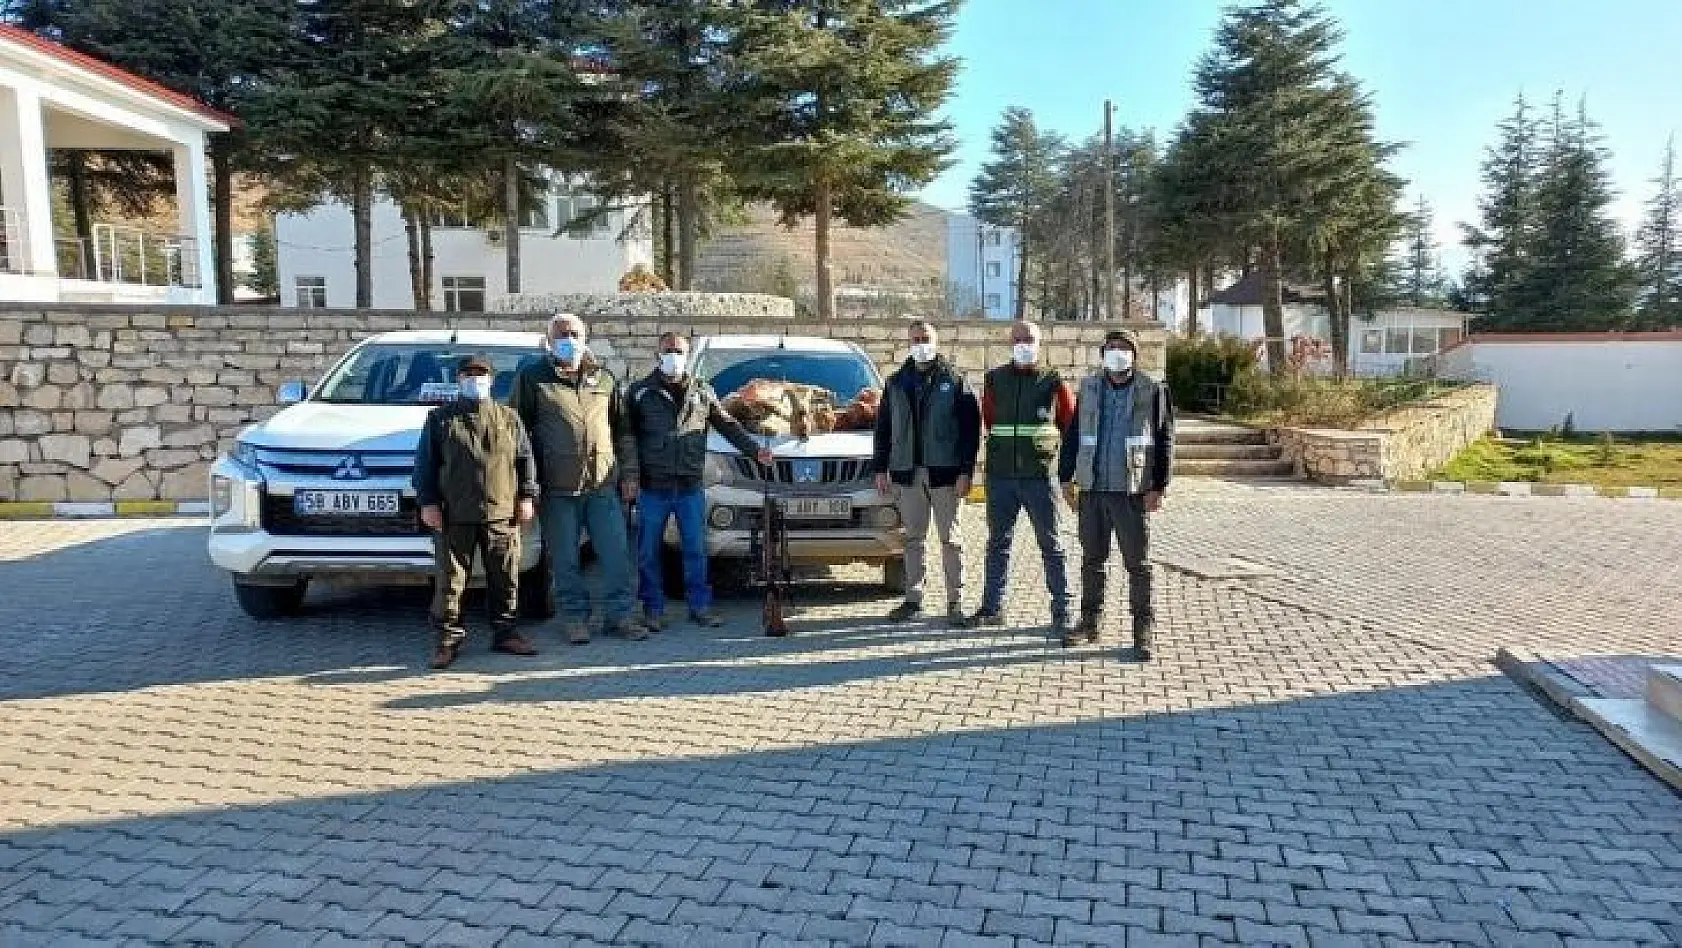 Tunceli'de iki yaban keçisi avlayan şahıslara 125 bin lira ceza kesildi